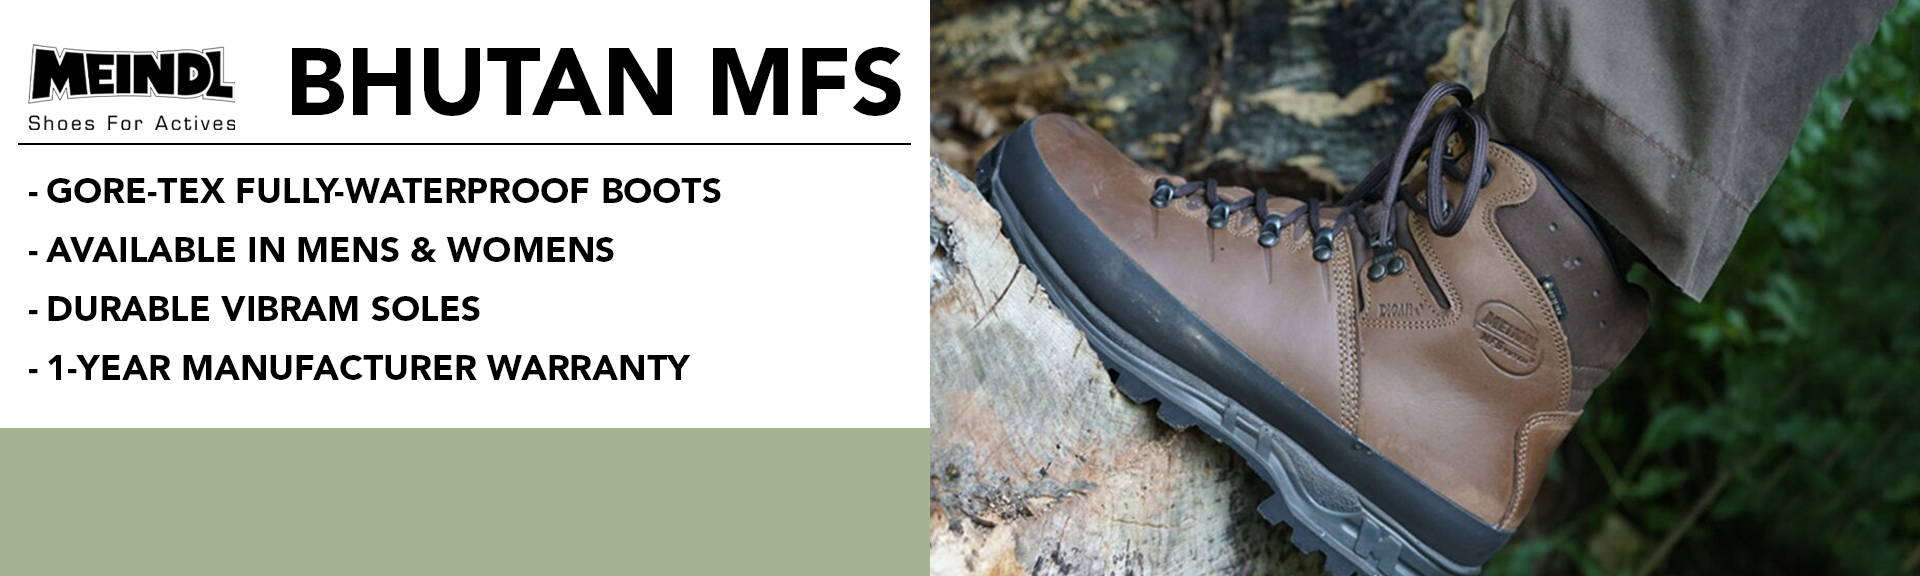 Meindl Bhutan MFS hiking boots for men & women